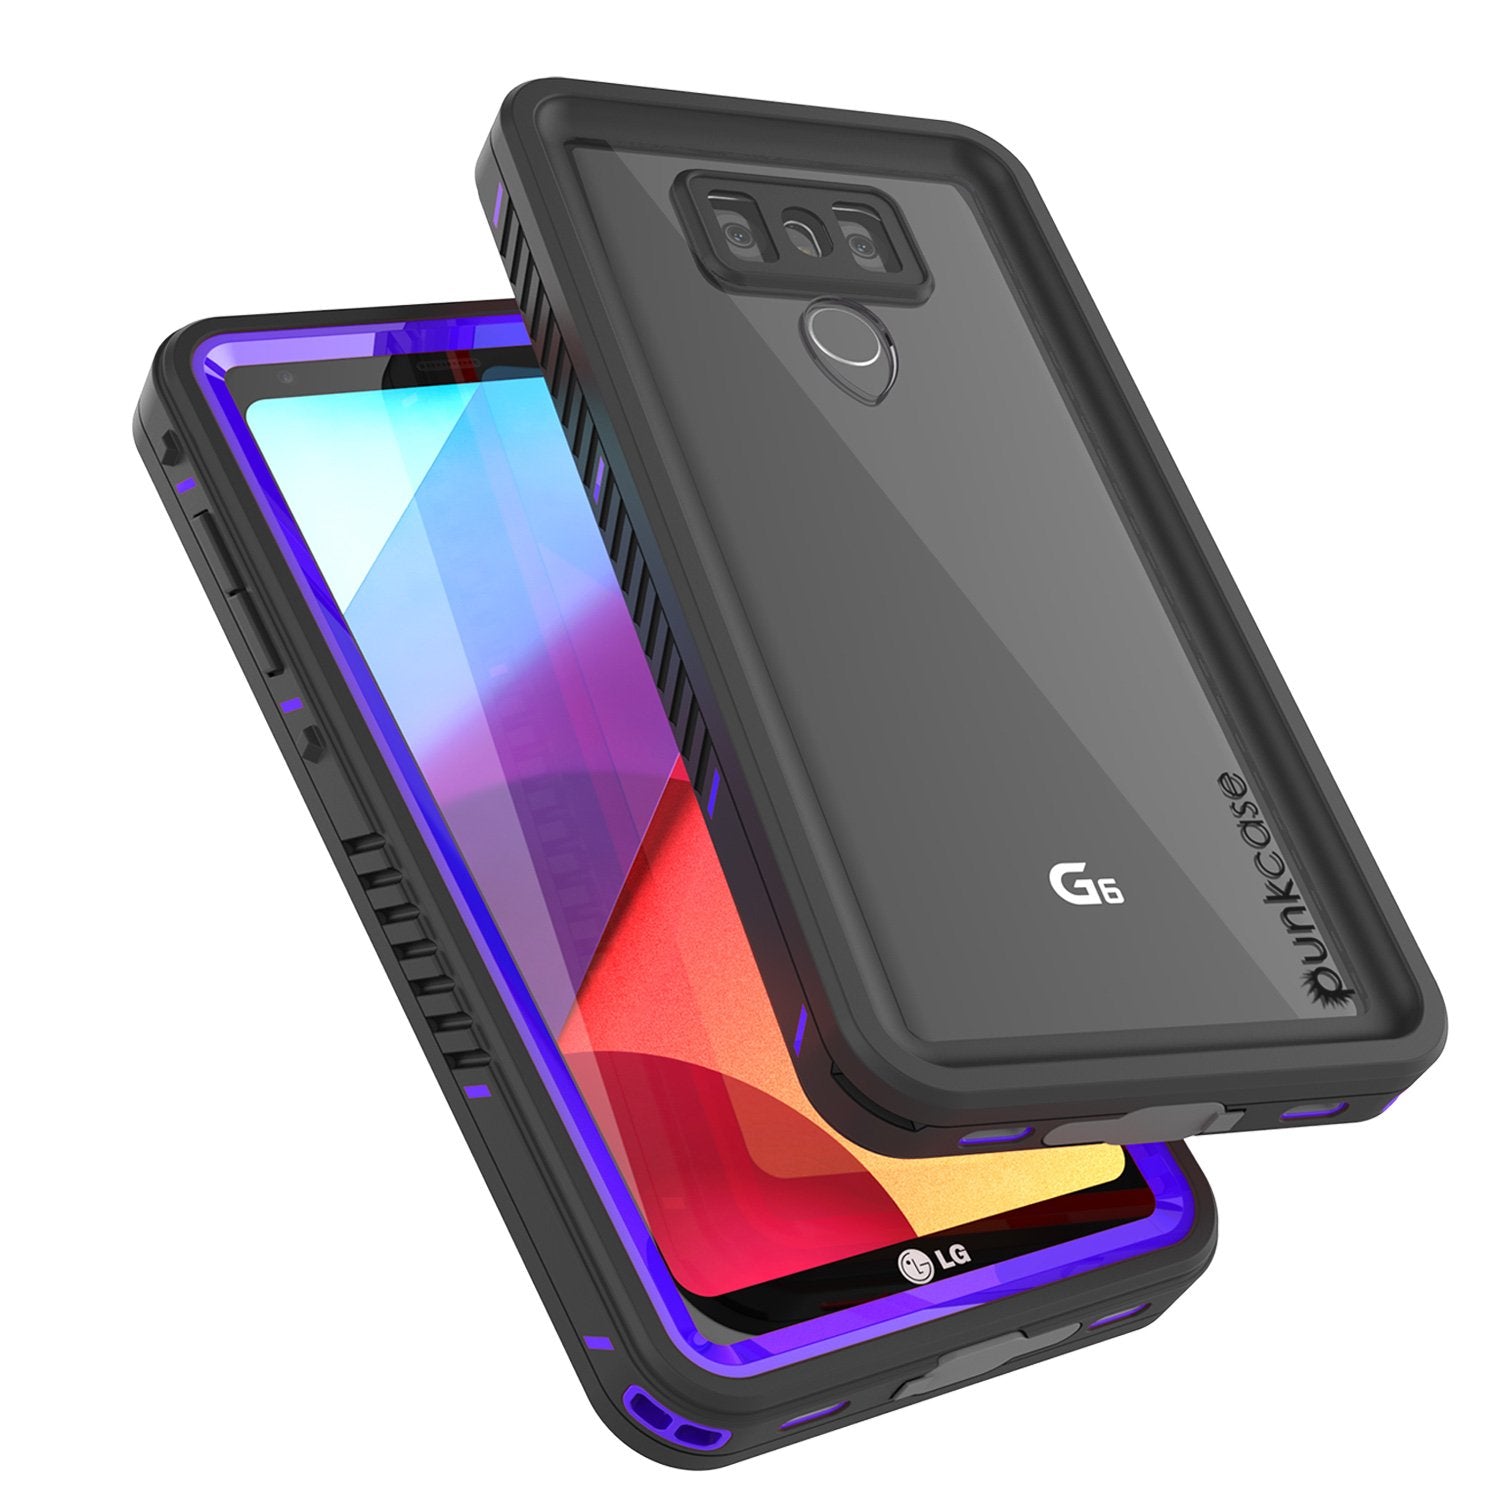 LG G6 Waterproof Case, Punkcase [Extreme Series] [Slim Fit] [IP68 Certified] [Shockproof] [Snowproof] [Dirproof] Armor Cover W/ Built In Screen Protector for LG G6 [PURPLE]